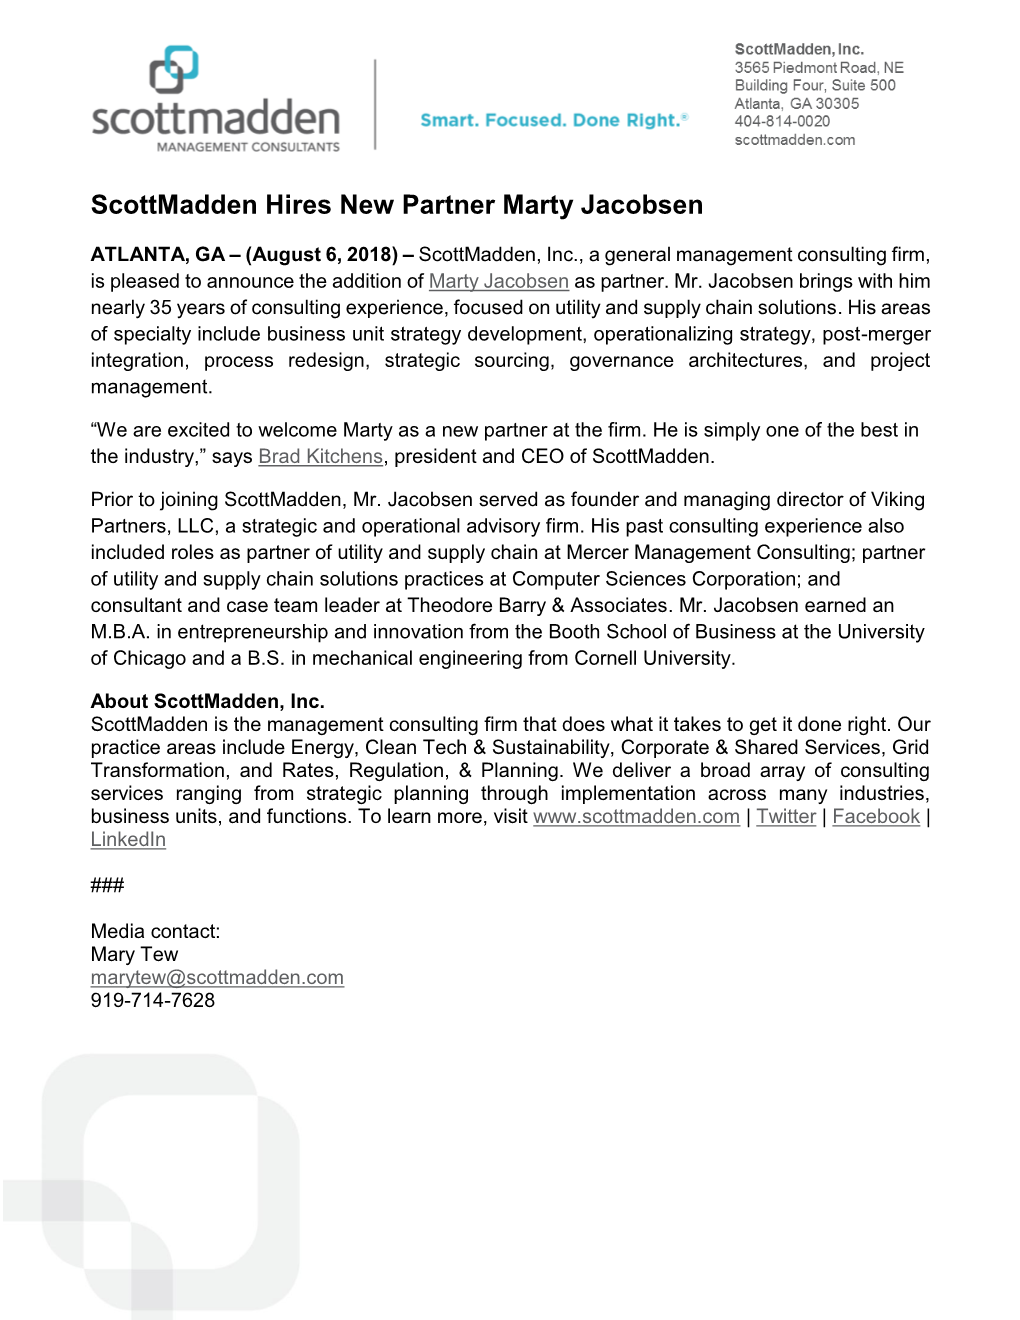 Scottmadden Hires New Partner Marty Jacobsen